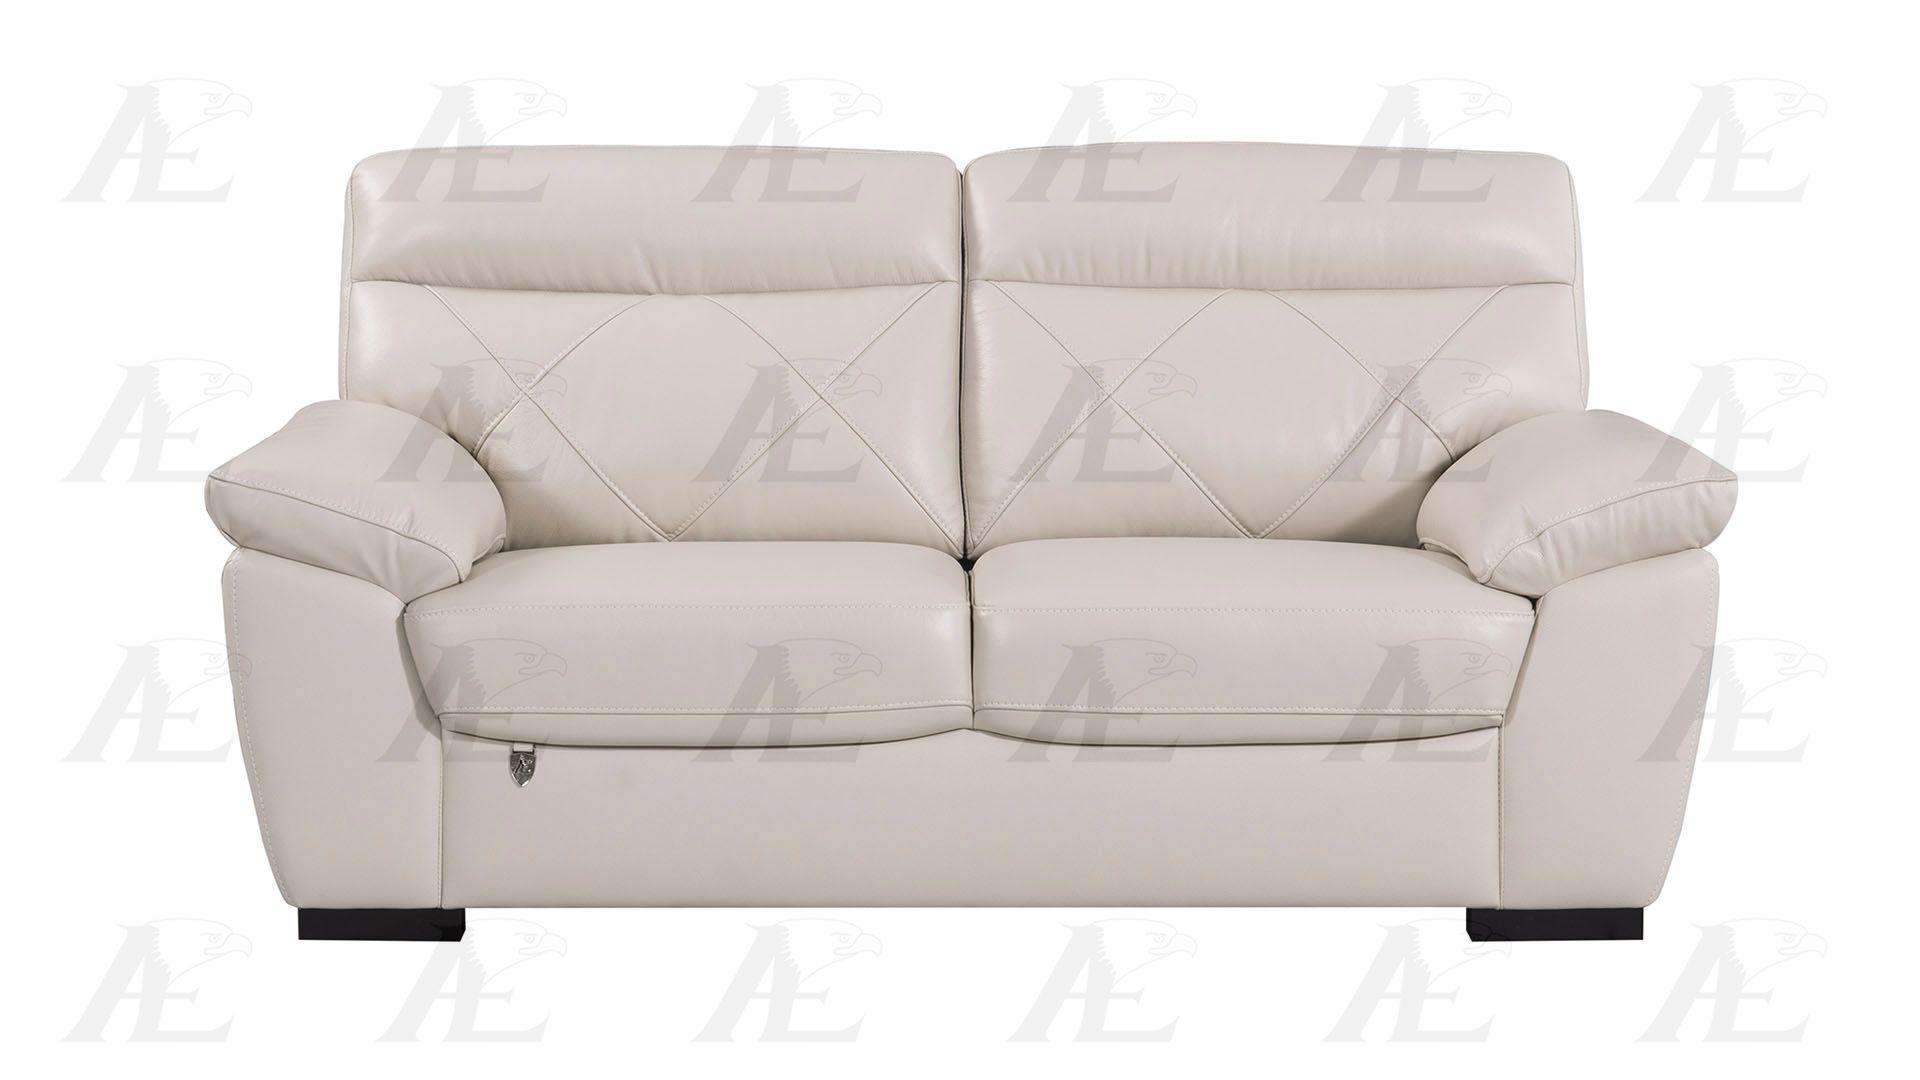 

                    
American Eagle Furniture EK081-LG-LS Loveseat Light Gray Italian Leather Purchase 
